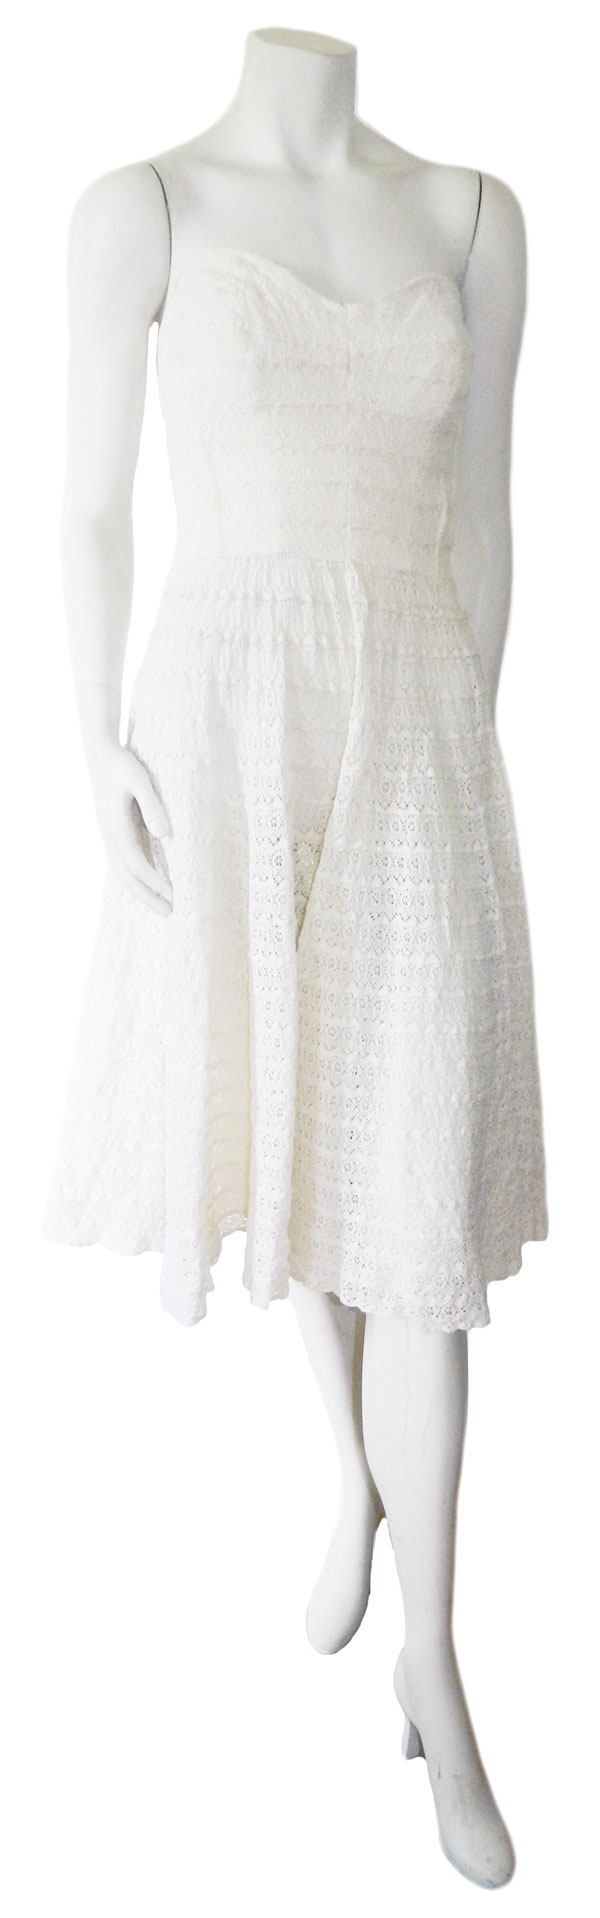 1950's white lace party dress